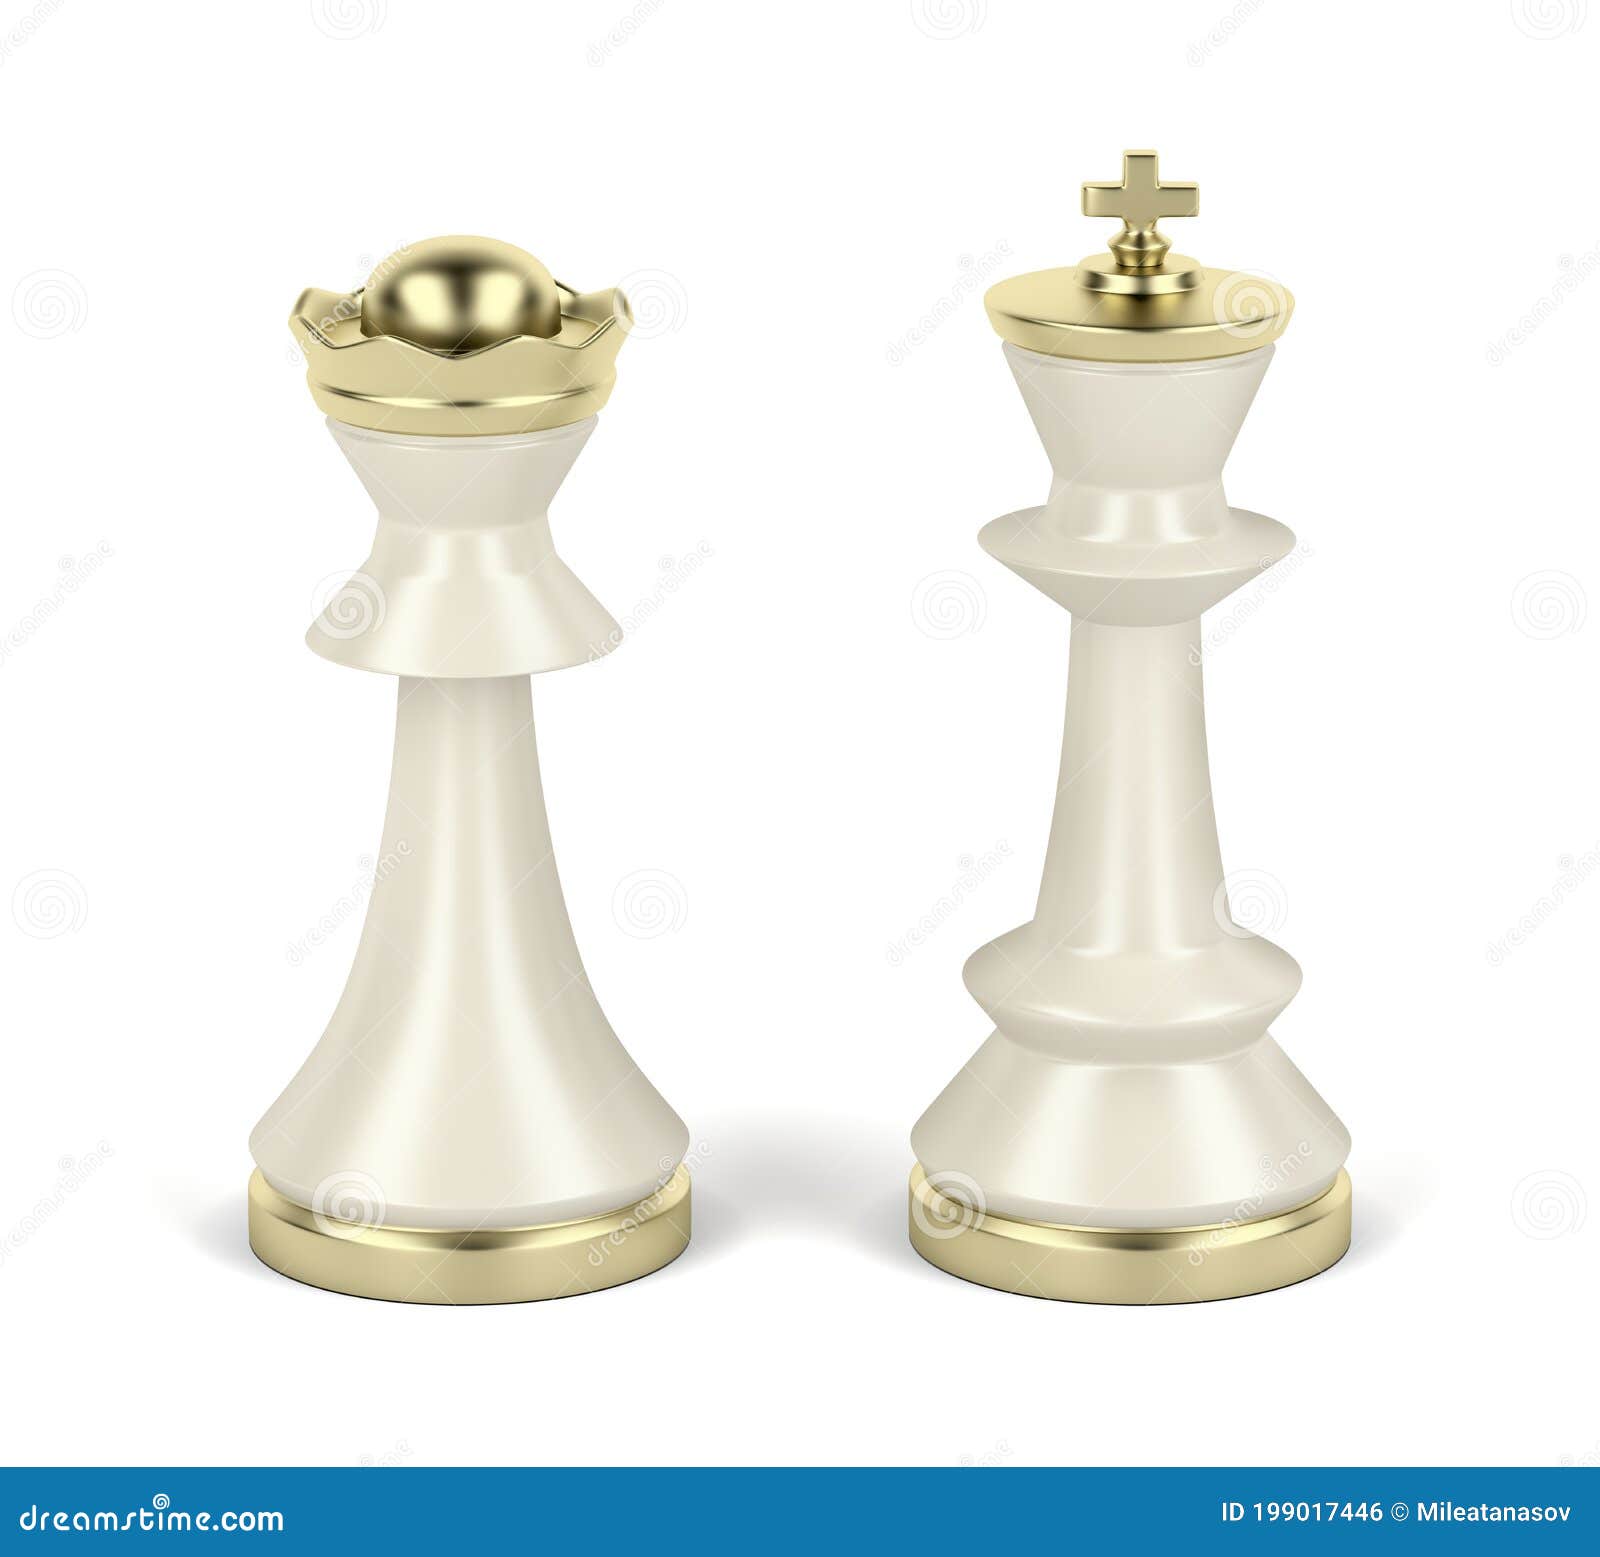 Rei bispo peão rainha tabuleiro de xadrez dourado cor símbolo